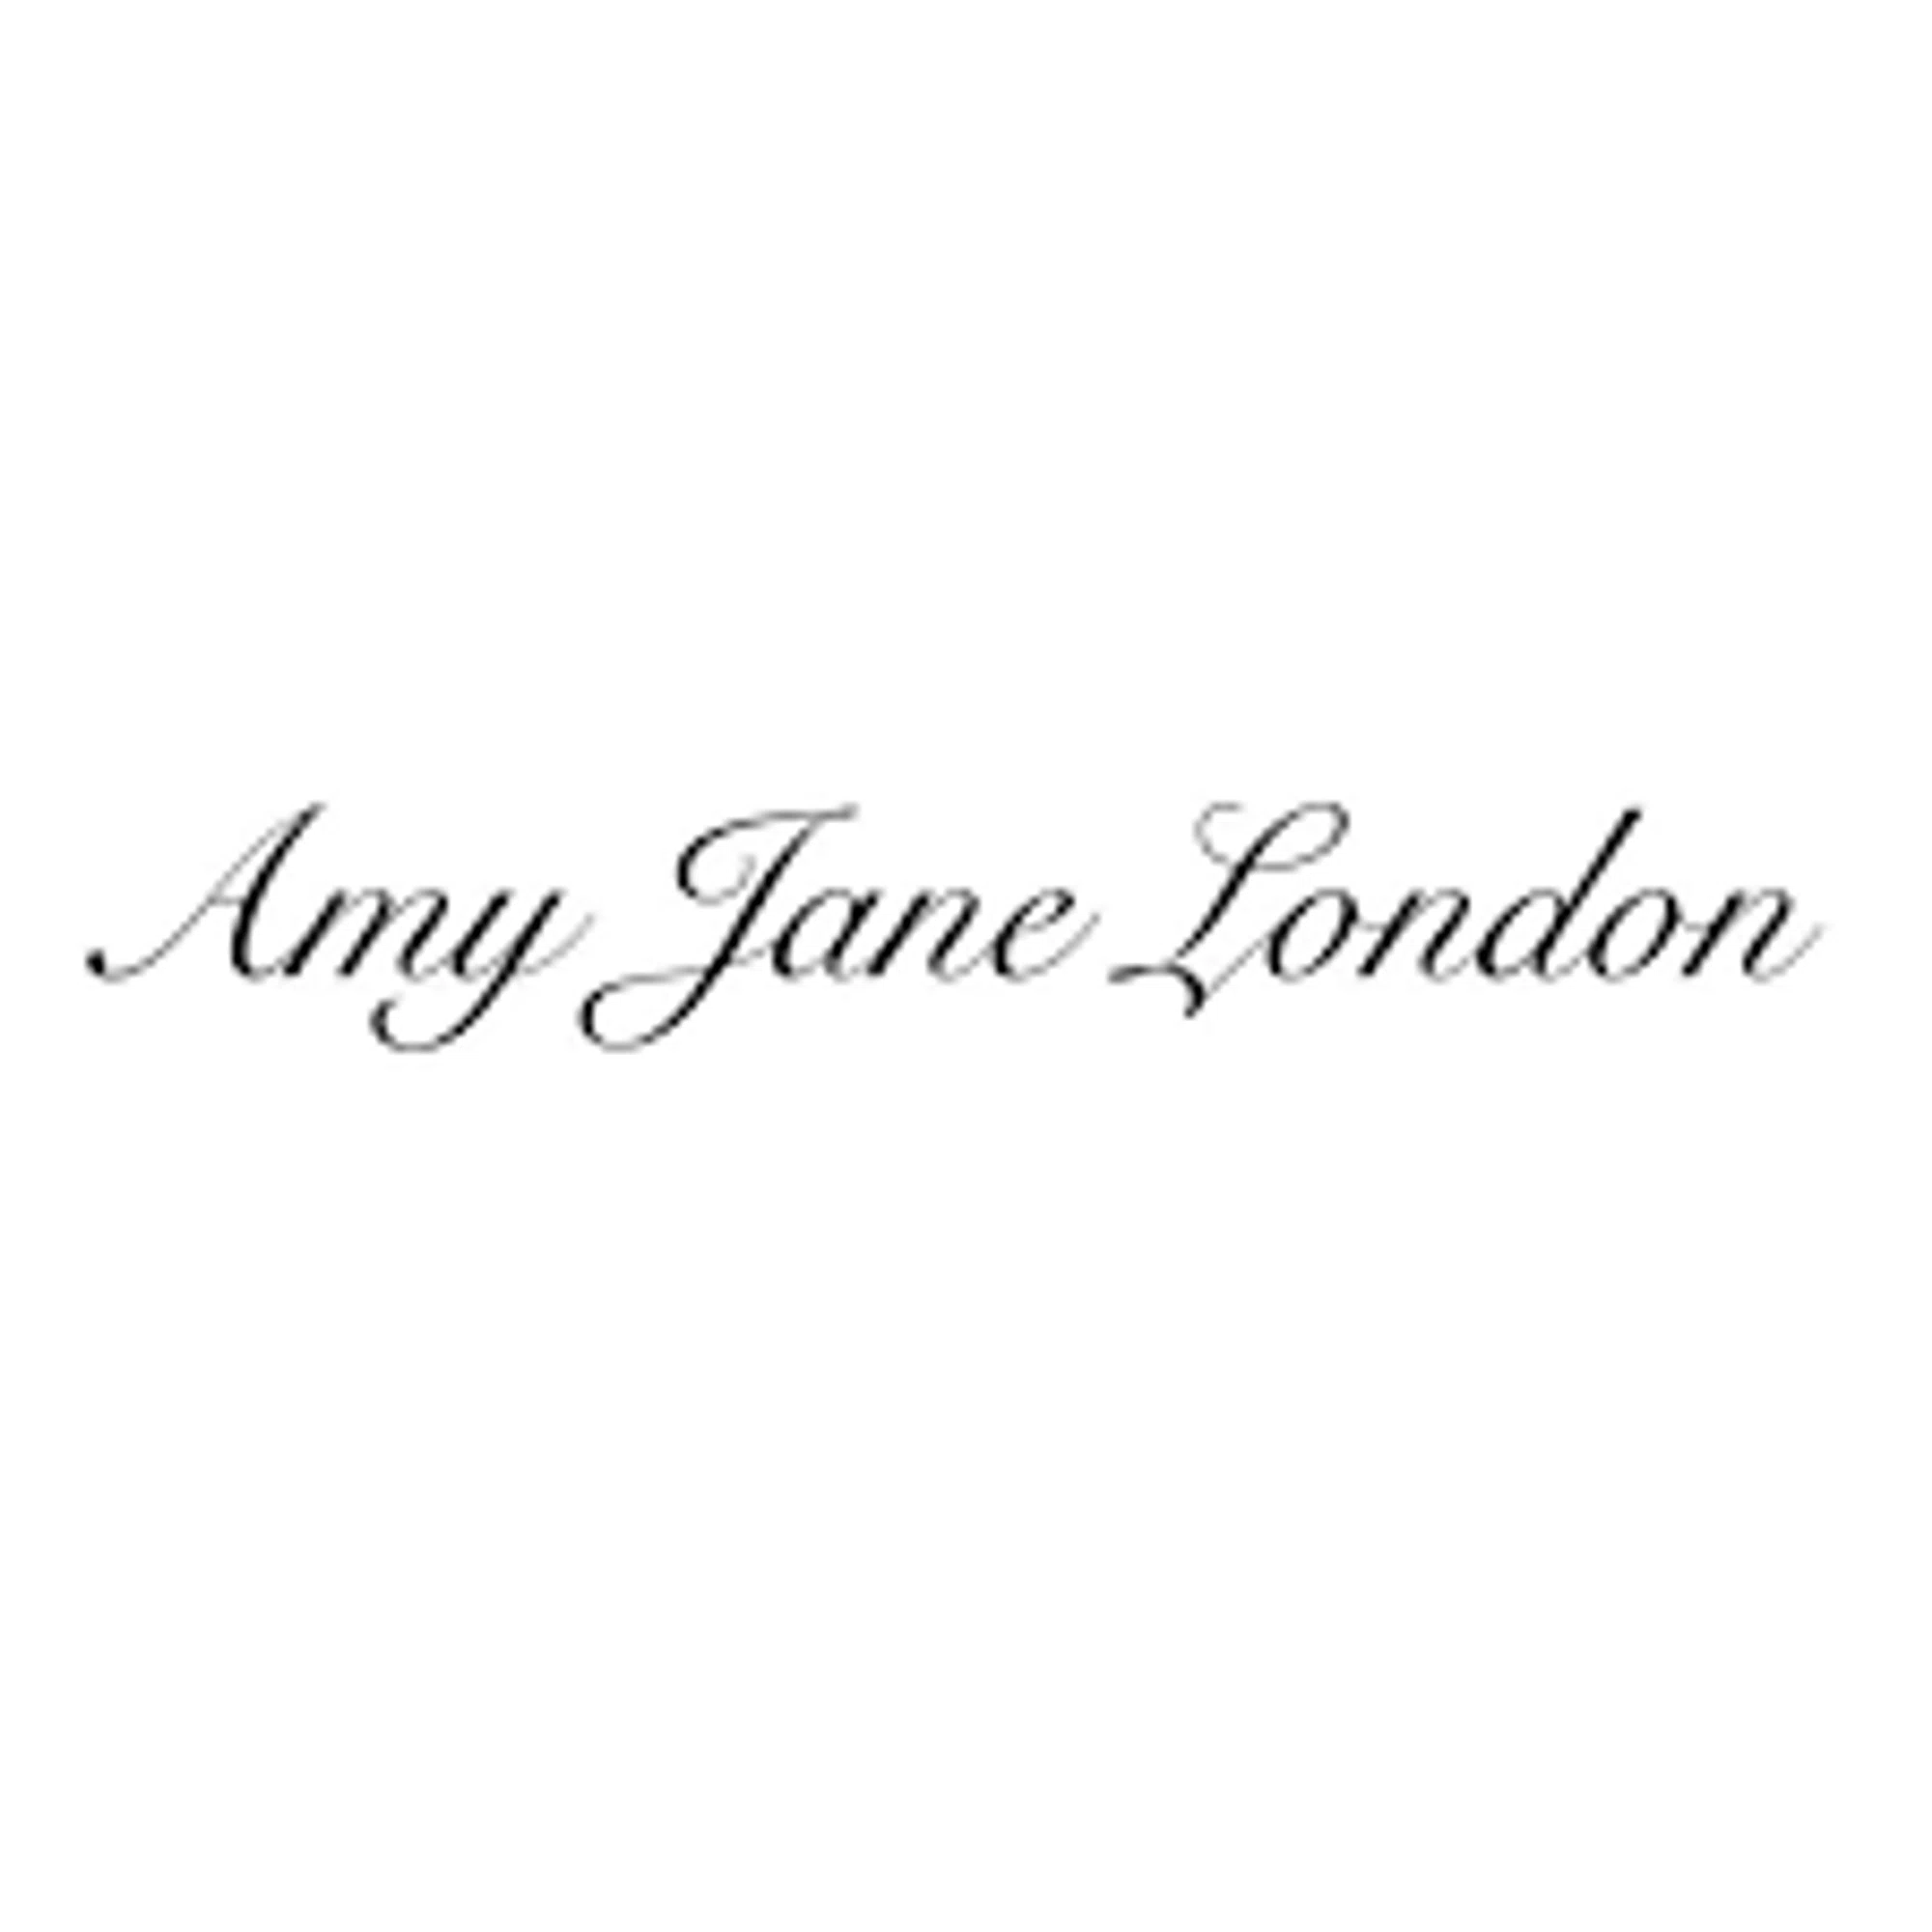 Amy Jane London